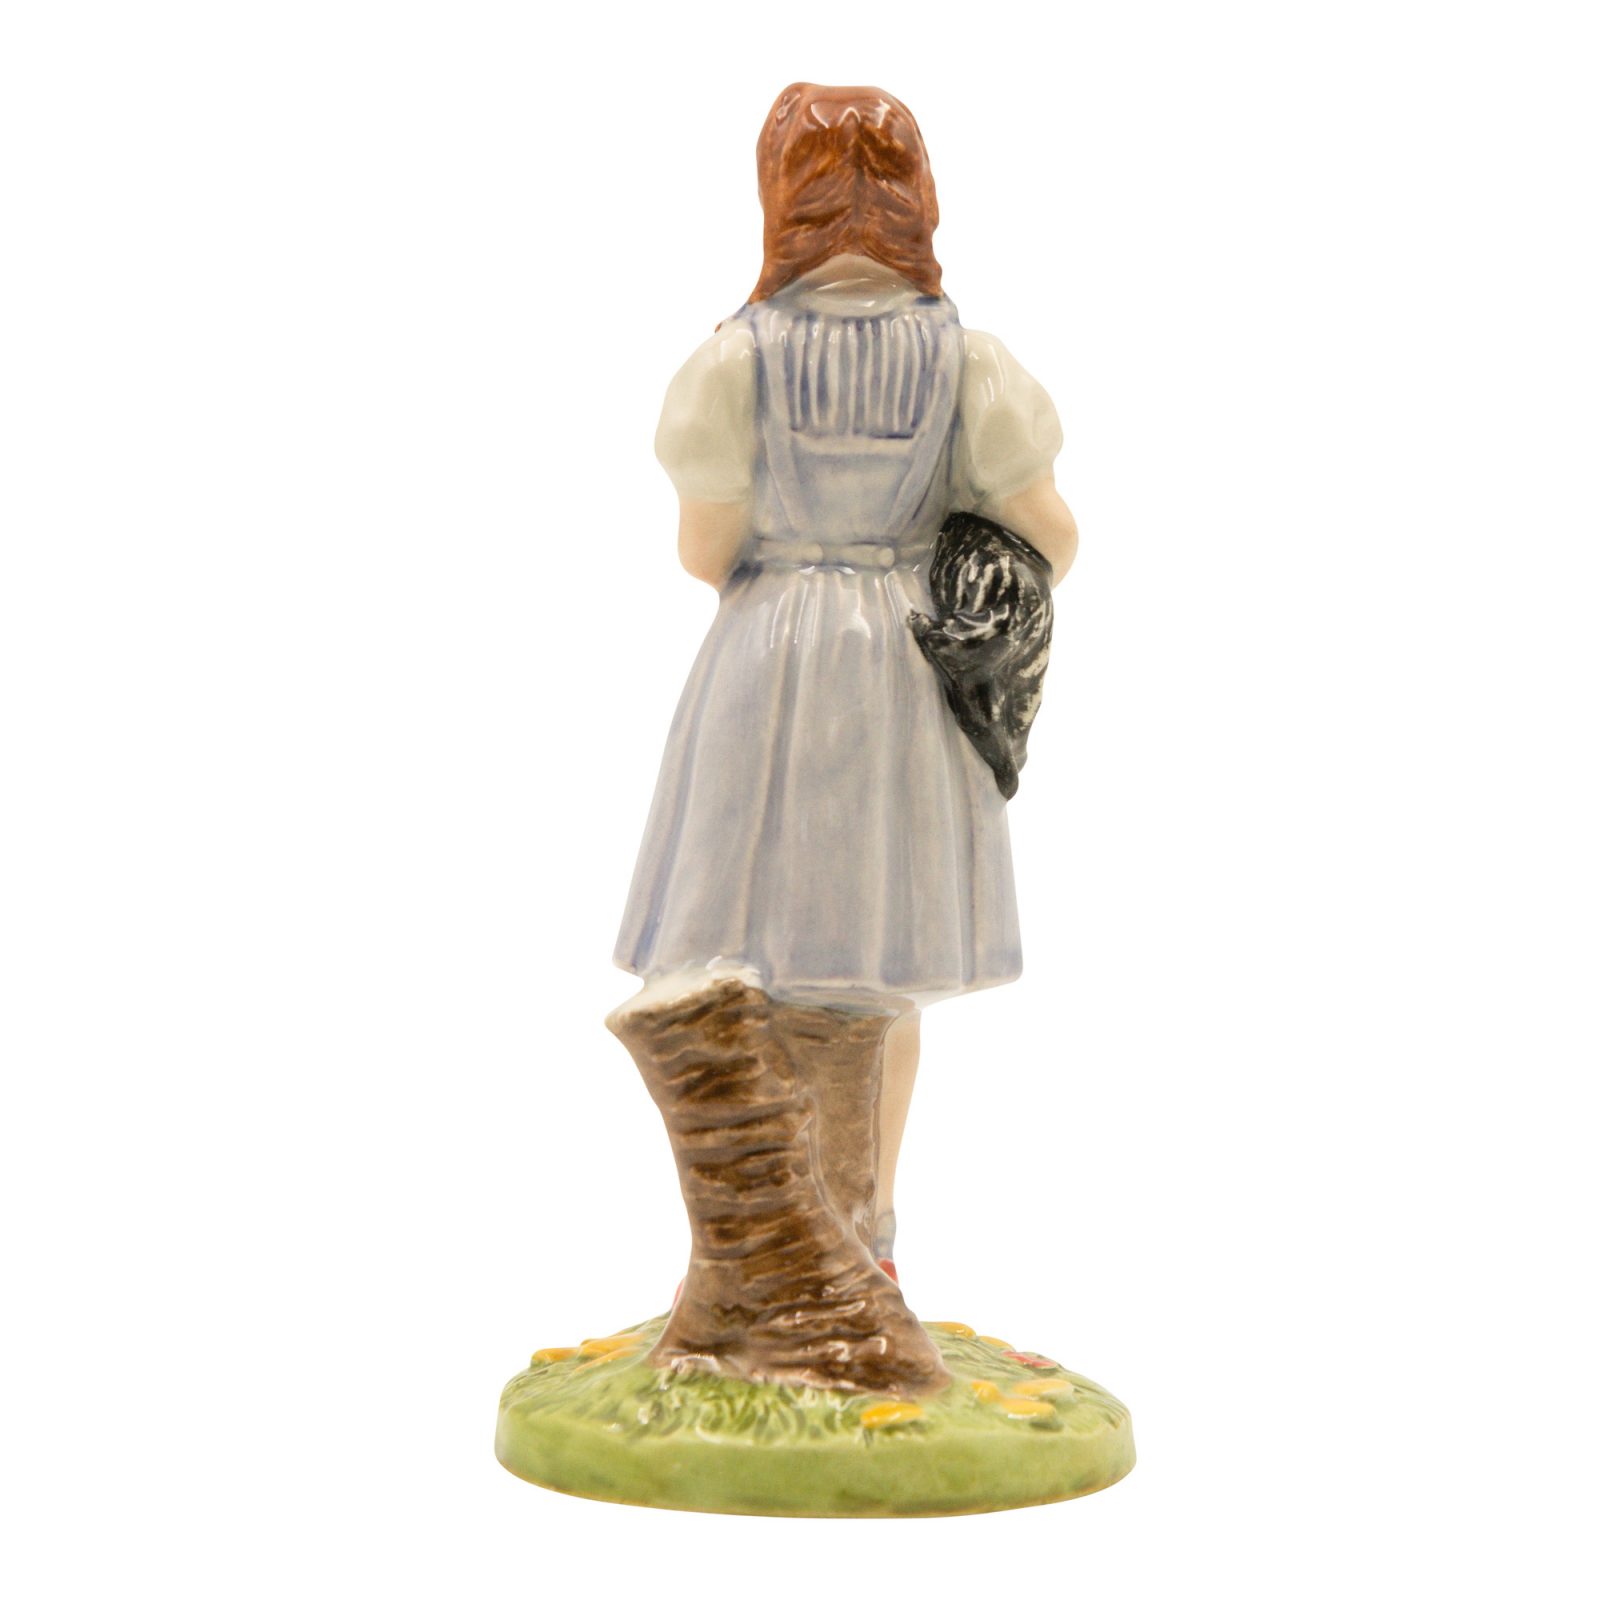 Dorothy Wizard of Oz HN3732 - Royal Doulton Storybook Figure